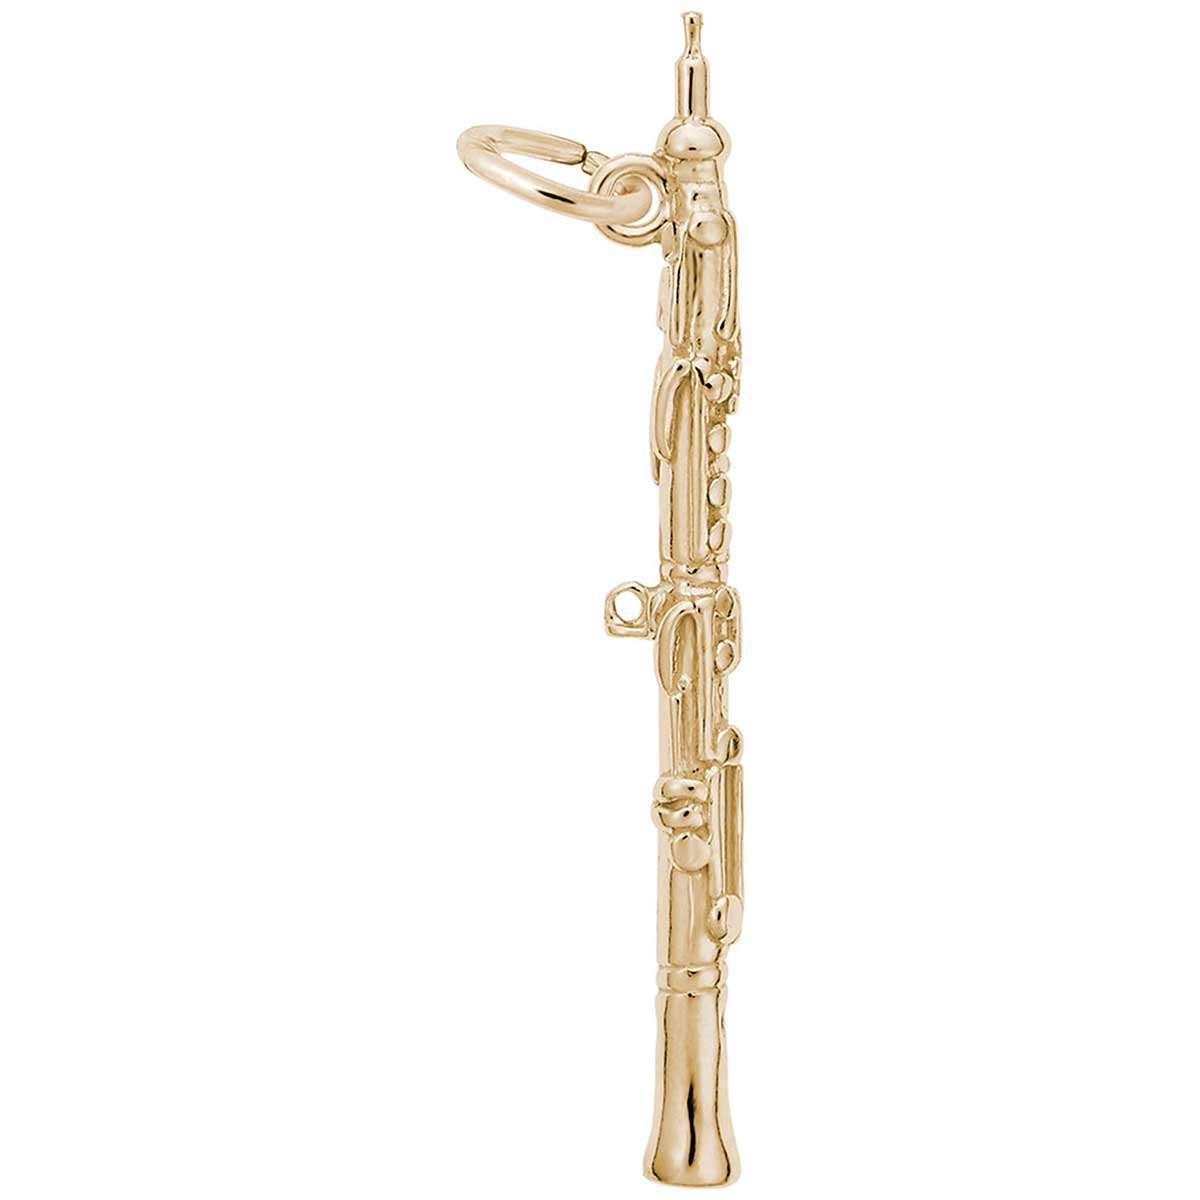 Rembrandt Oboe Charm, 14K Yellow Gold: Precious Accents, Ltd.